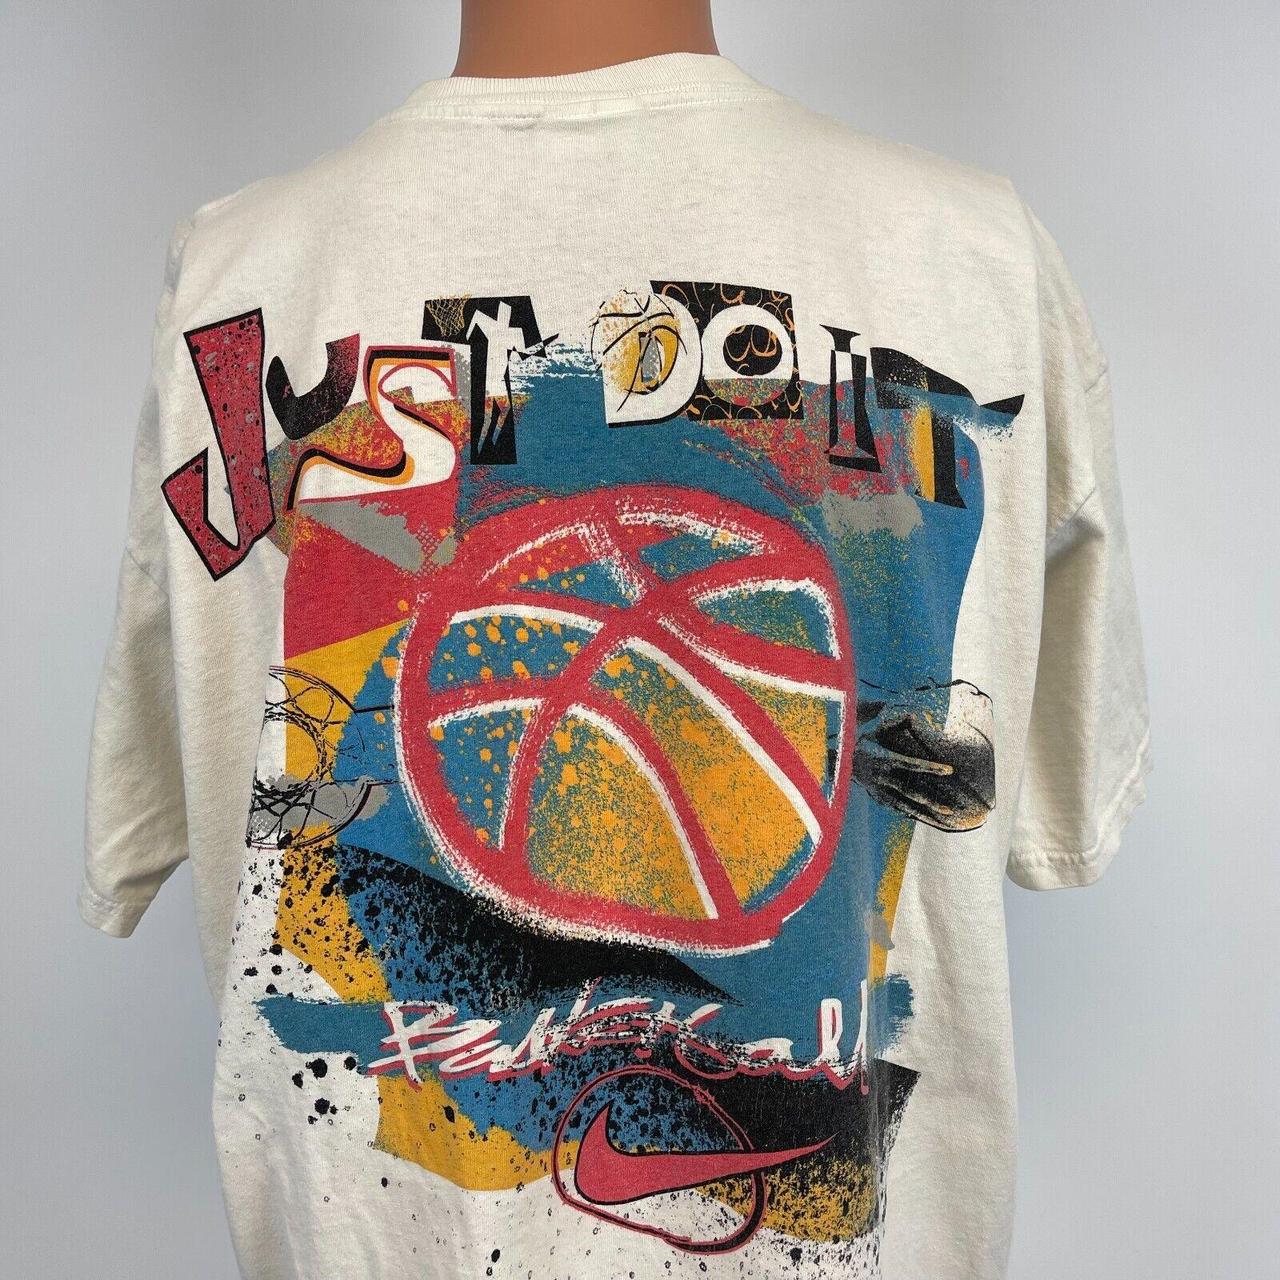 Vintage Nike NBA Tee Shirt 1990s Size Medium Made in USA